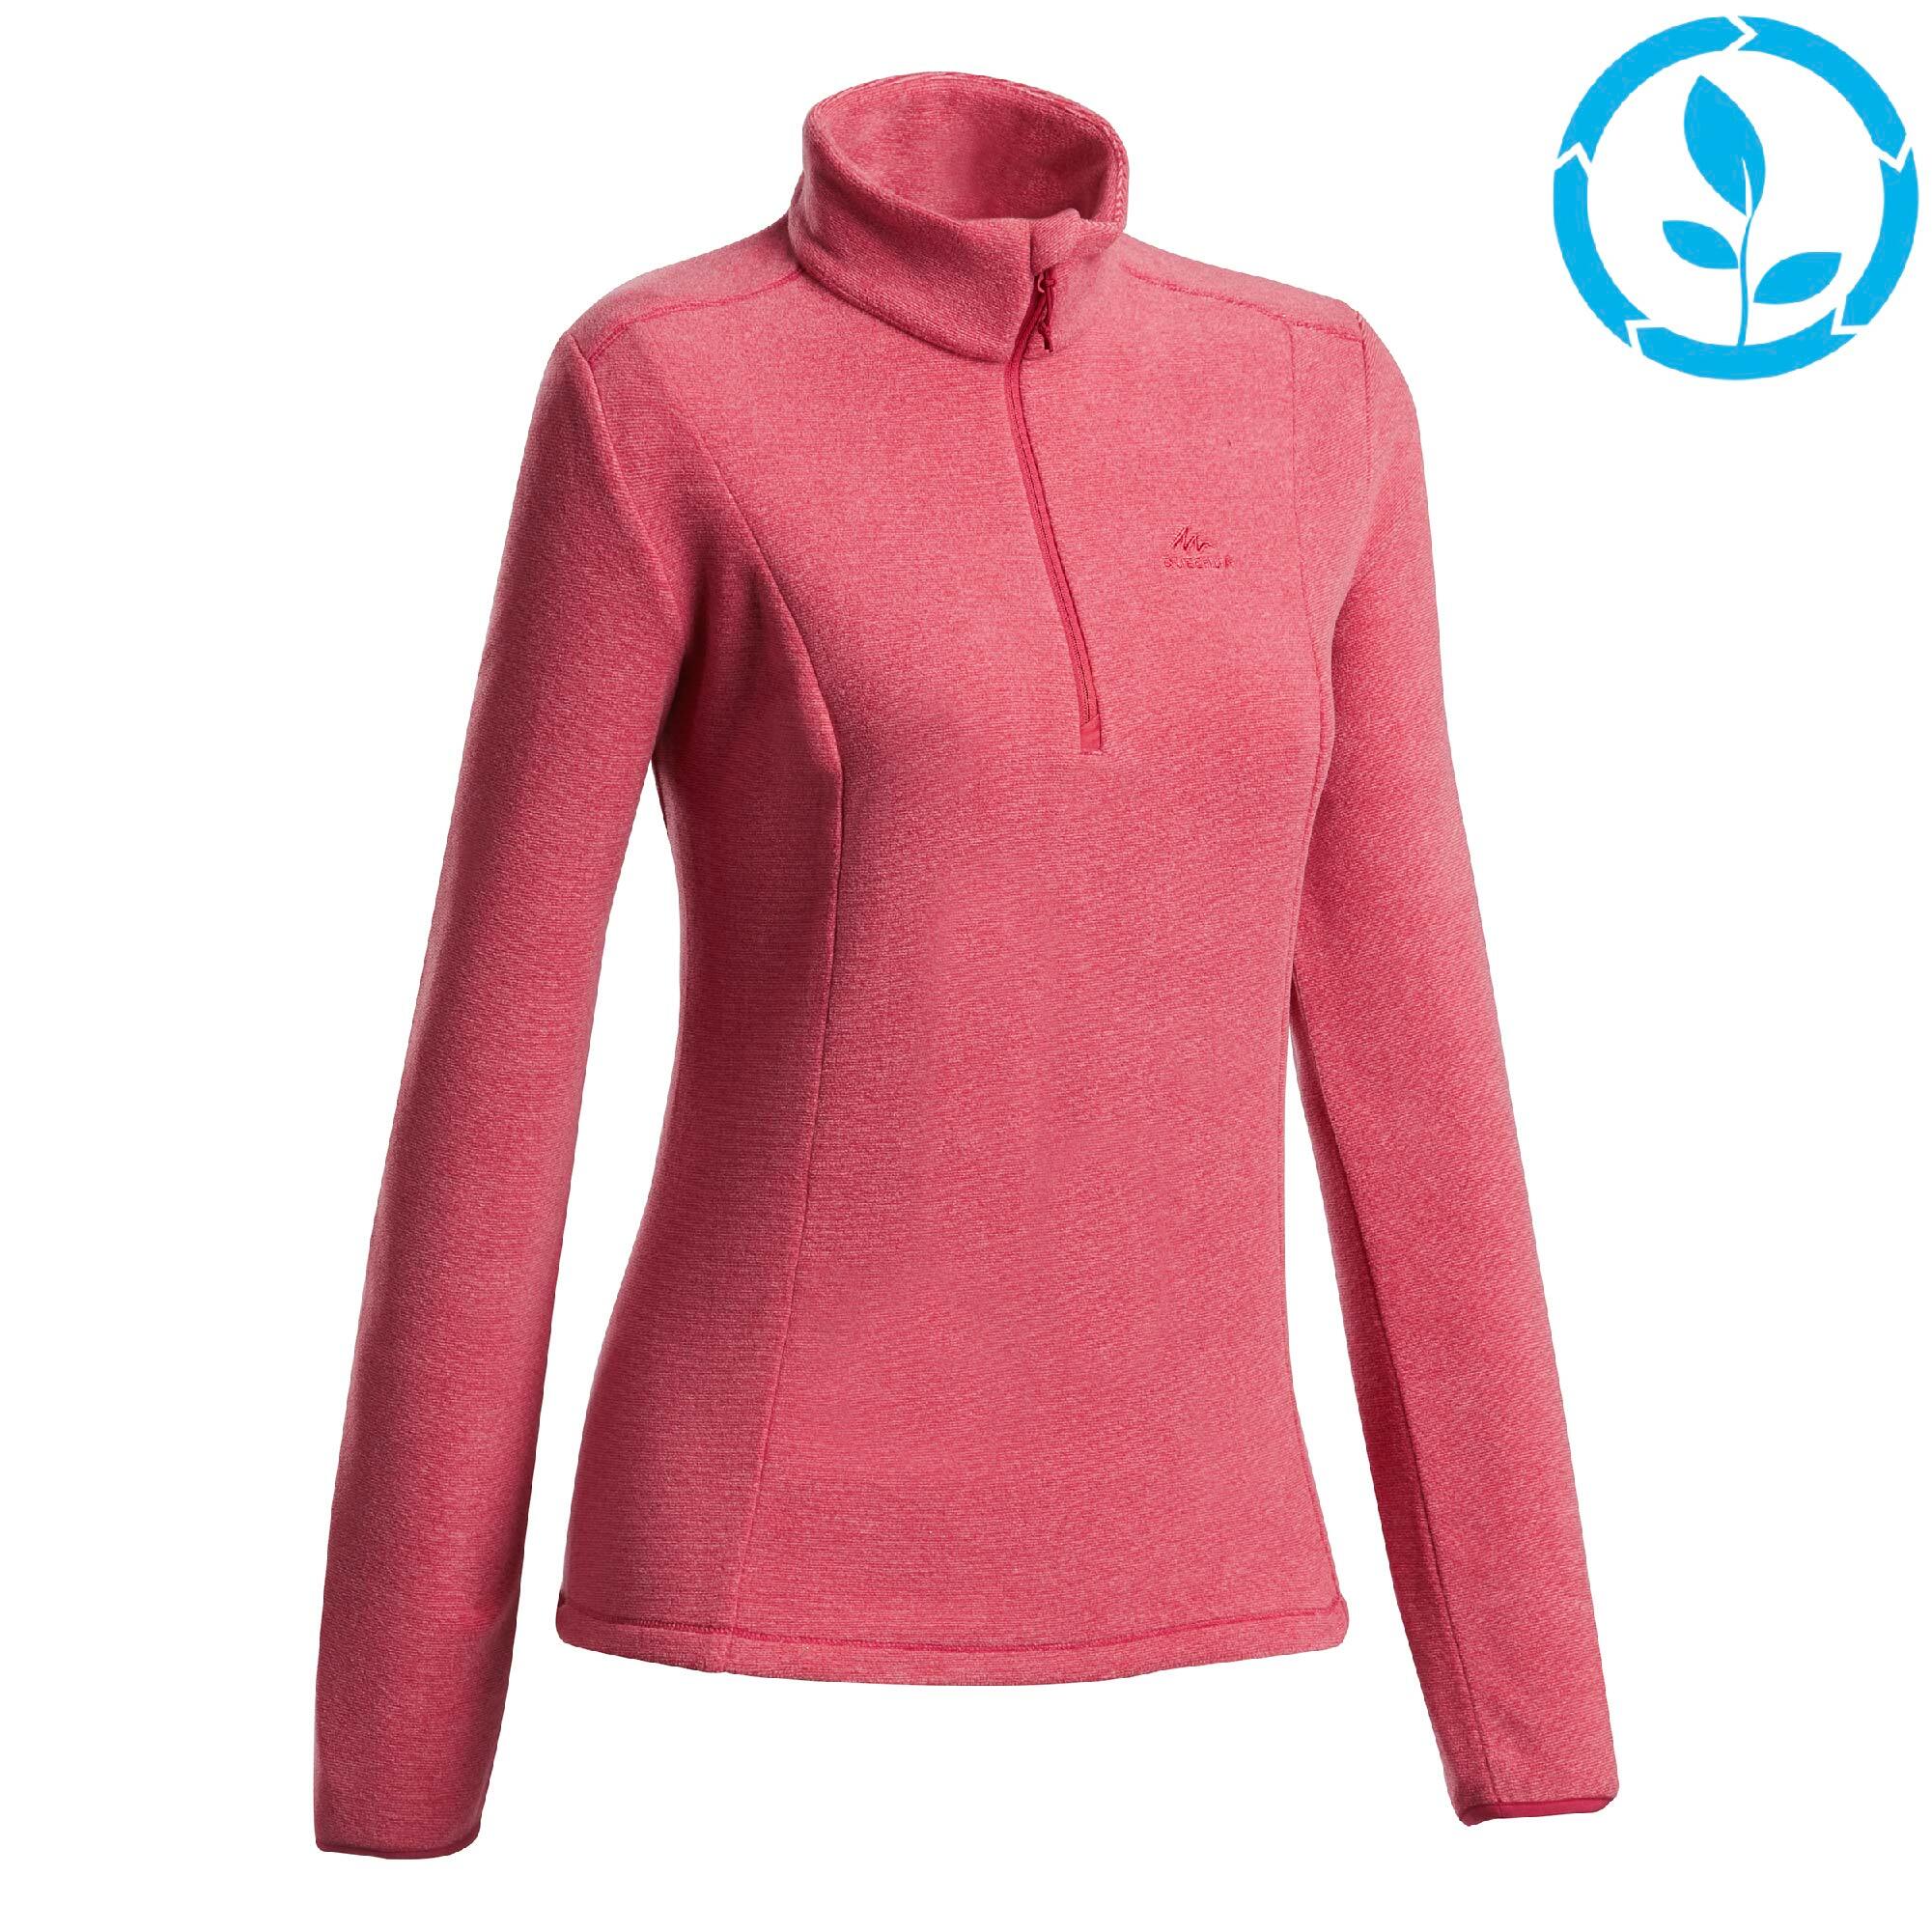 discount 98% Red S WOMEN FASHION Jumpers & Sweatshirts Fleece Quechua sweatshirt 